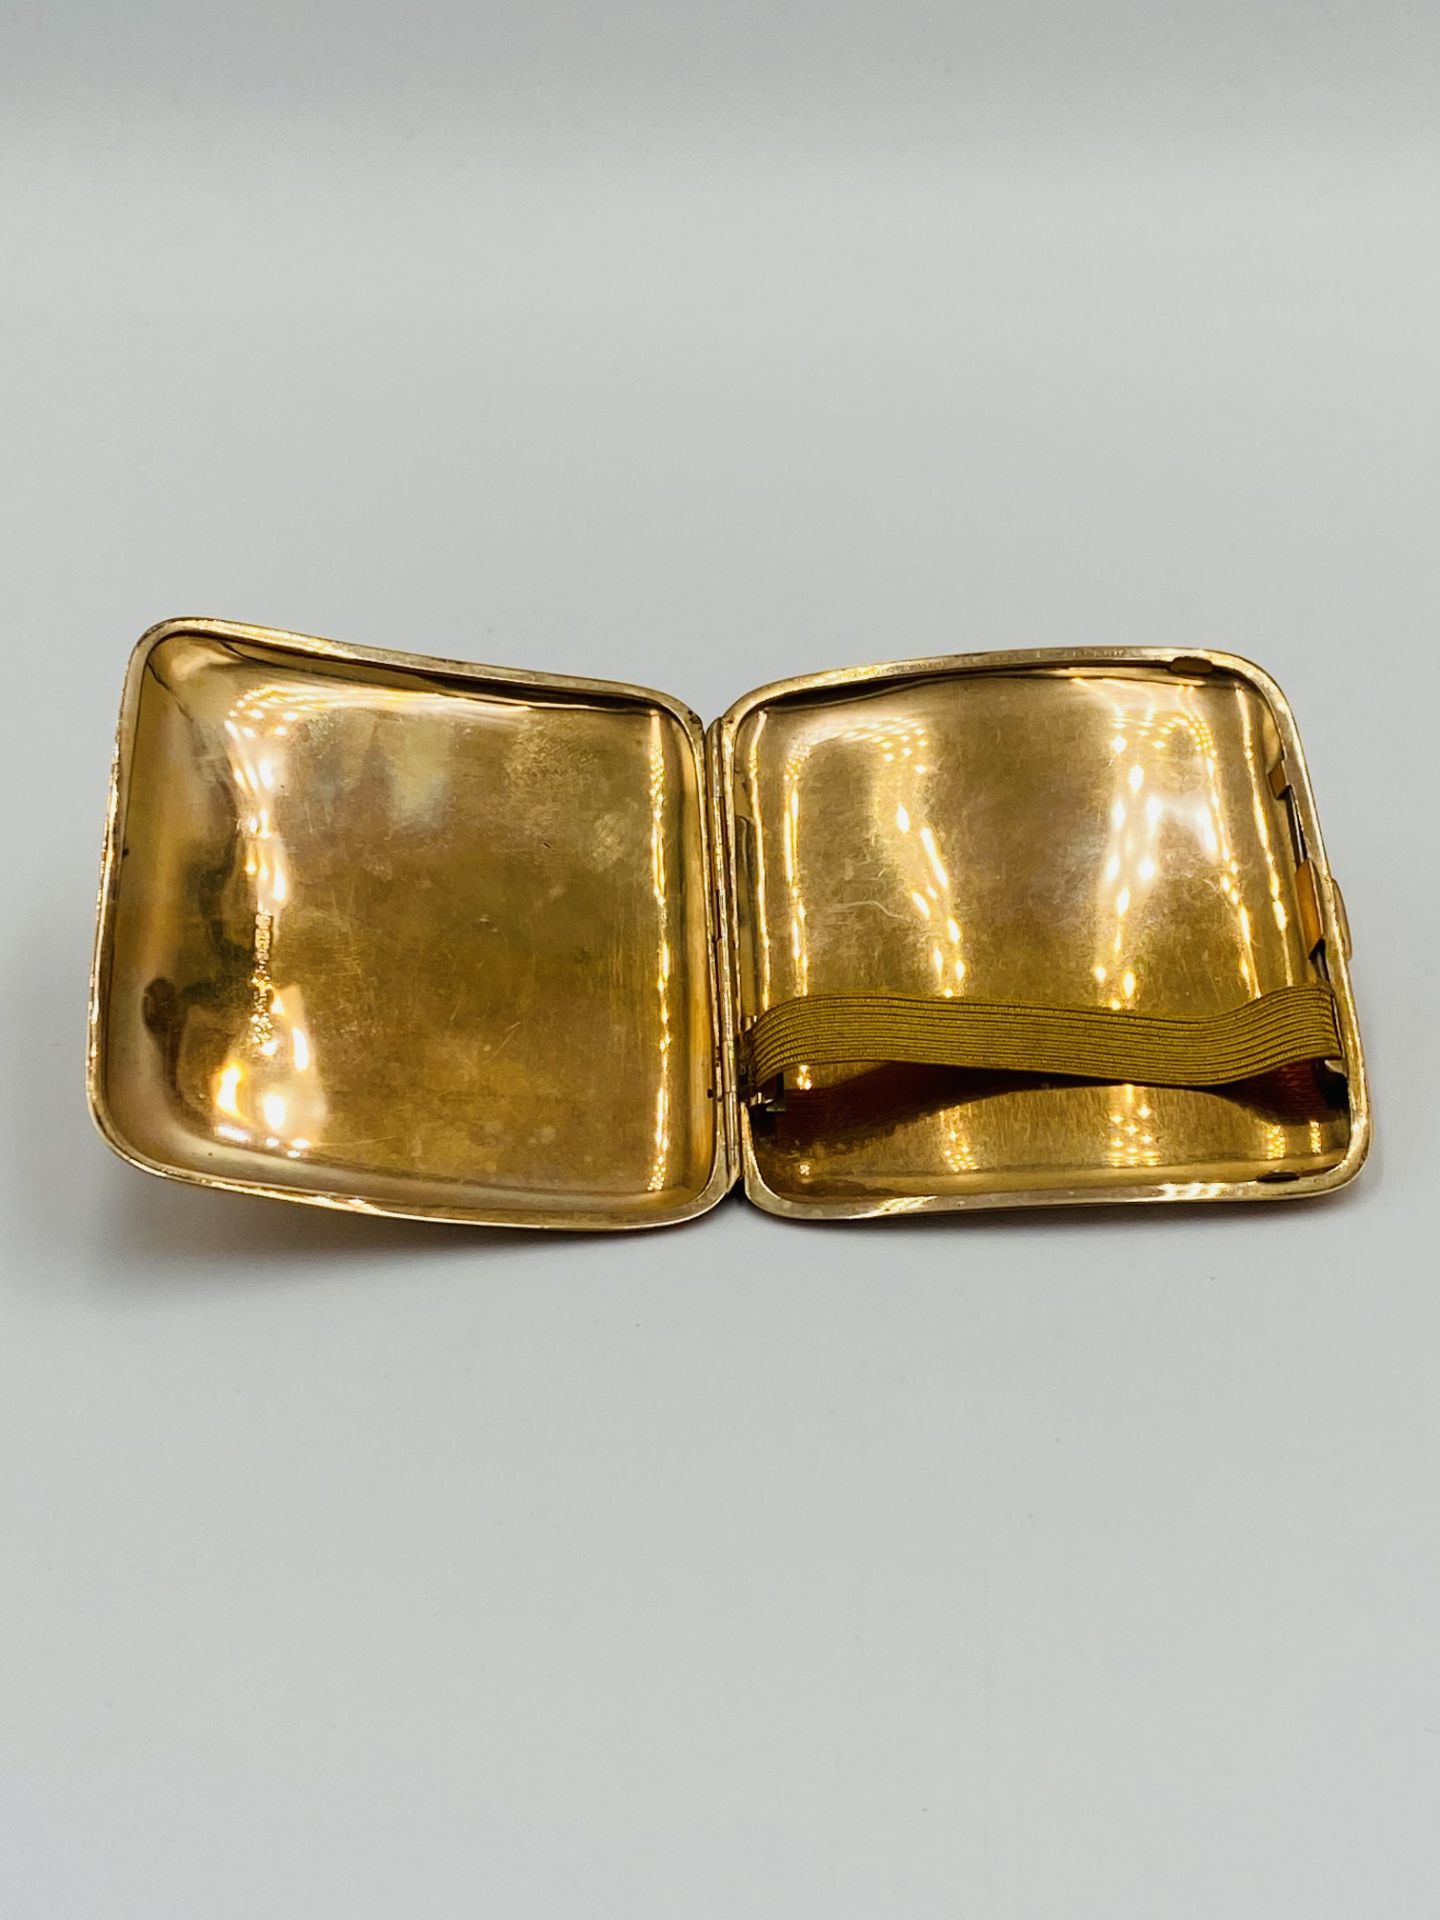 9ct gold cigarette case, 71.3g - Image 3 of 7